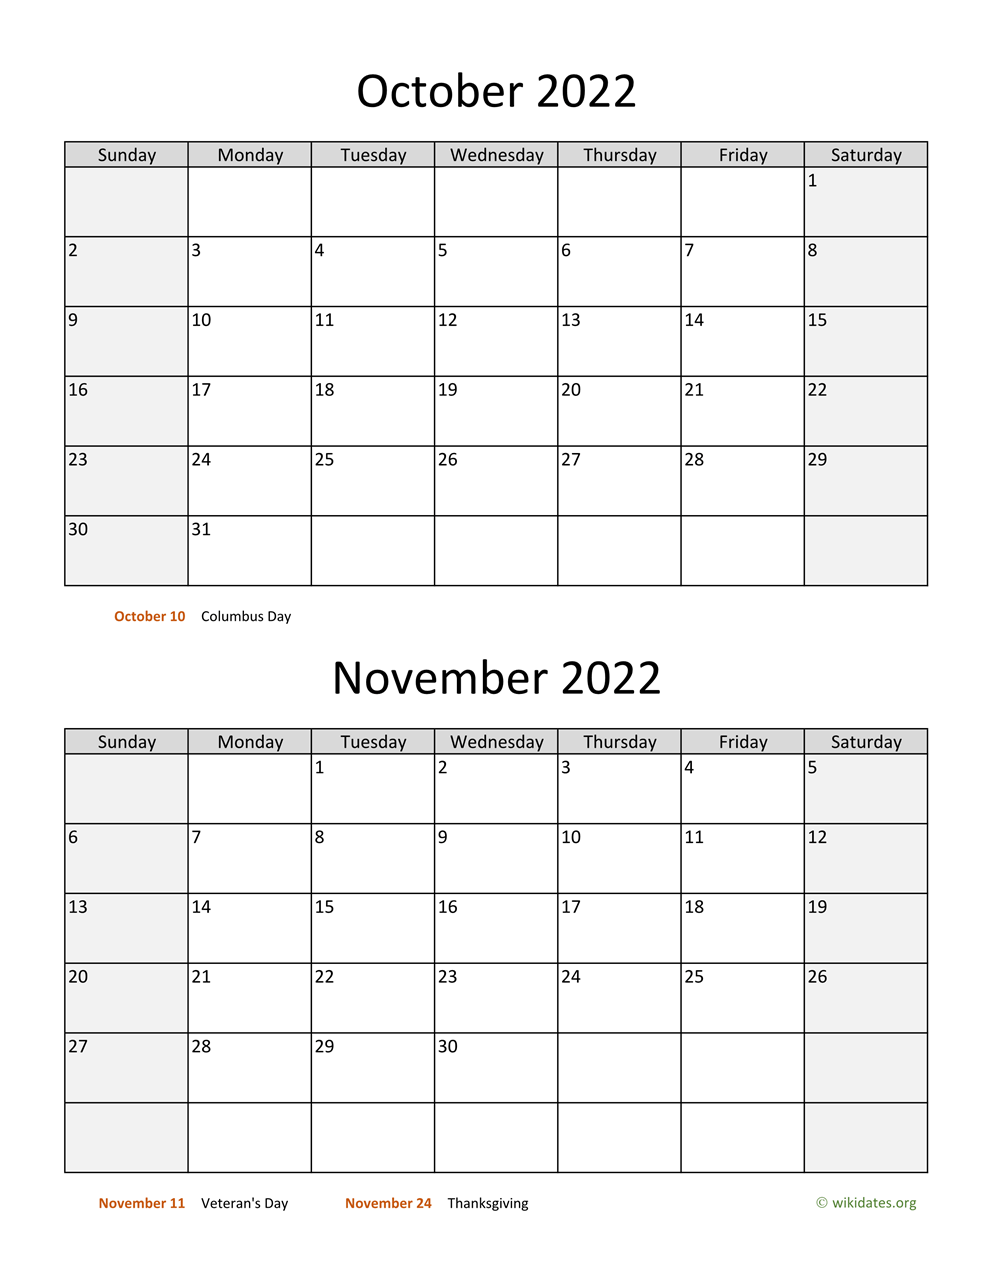 October November Calendar 2022 October And November 2022 Calendar | Wikidates.org